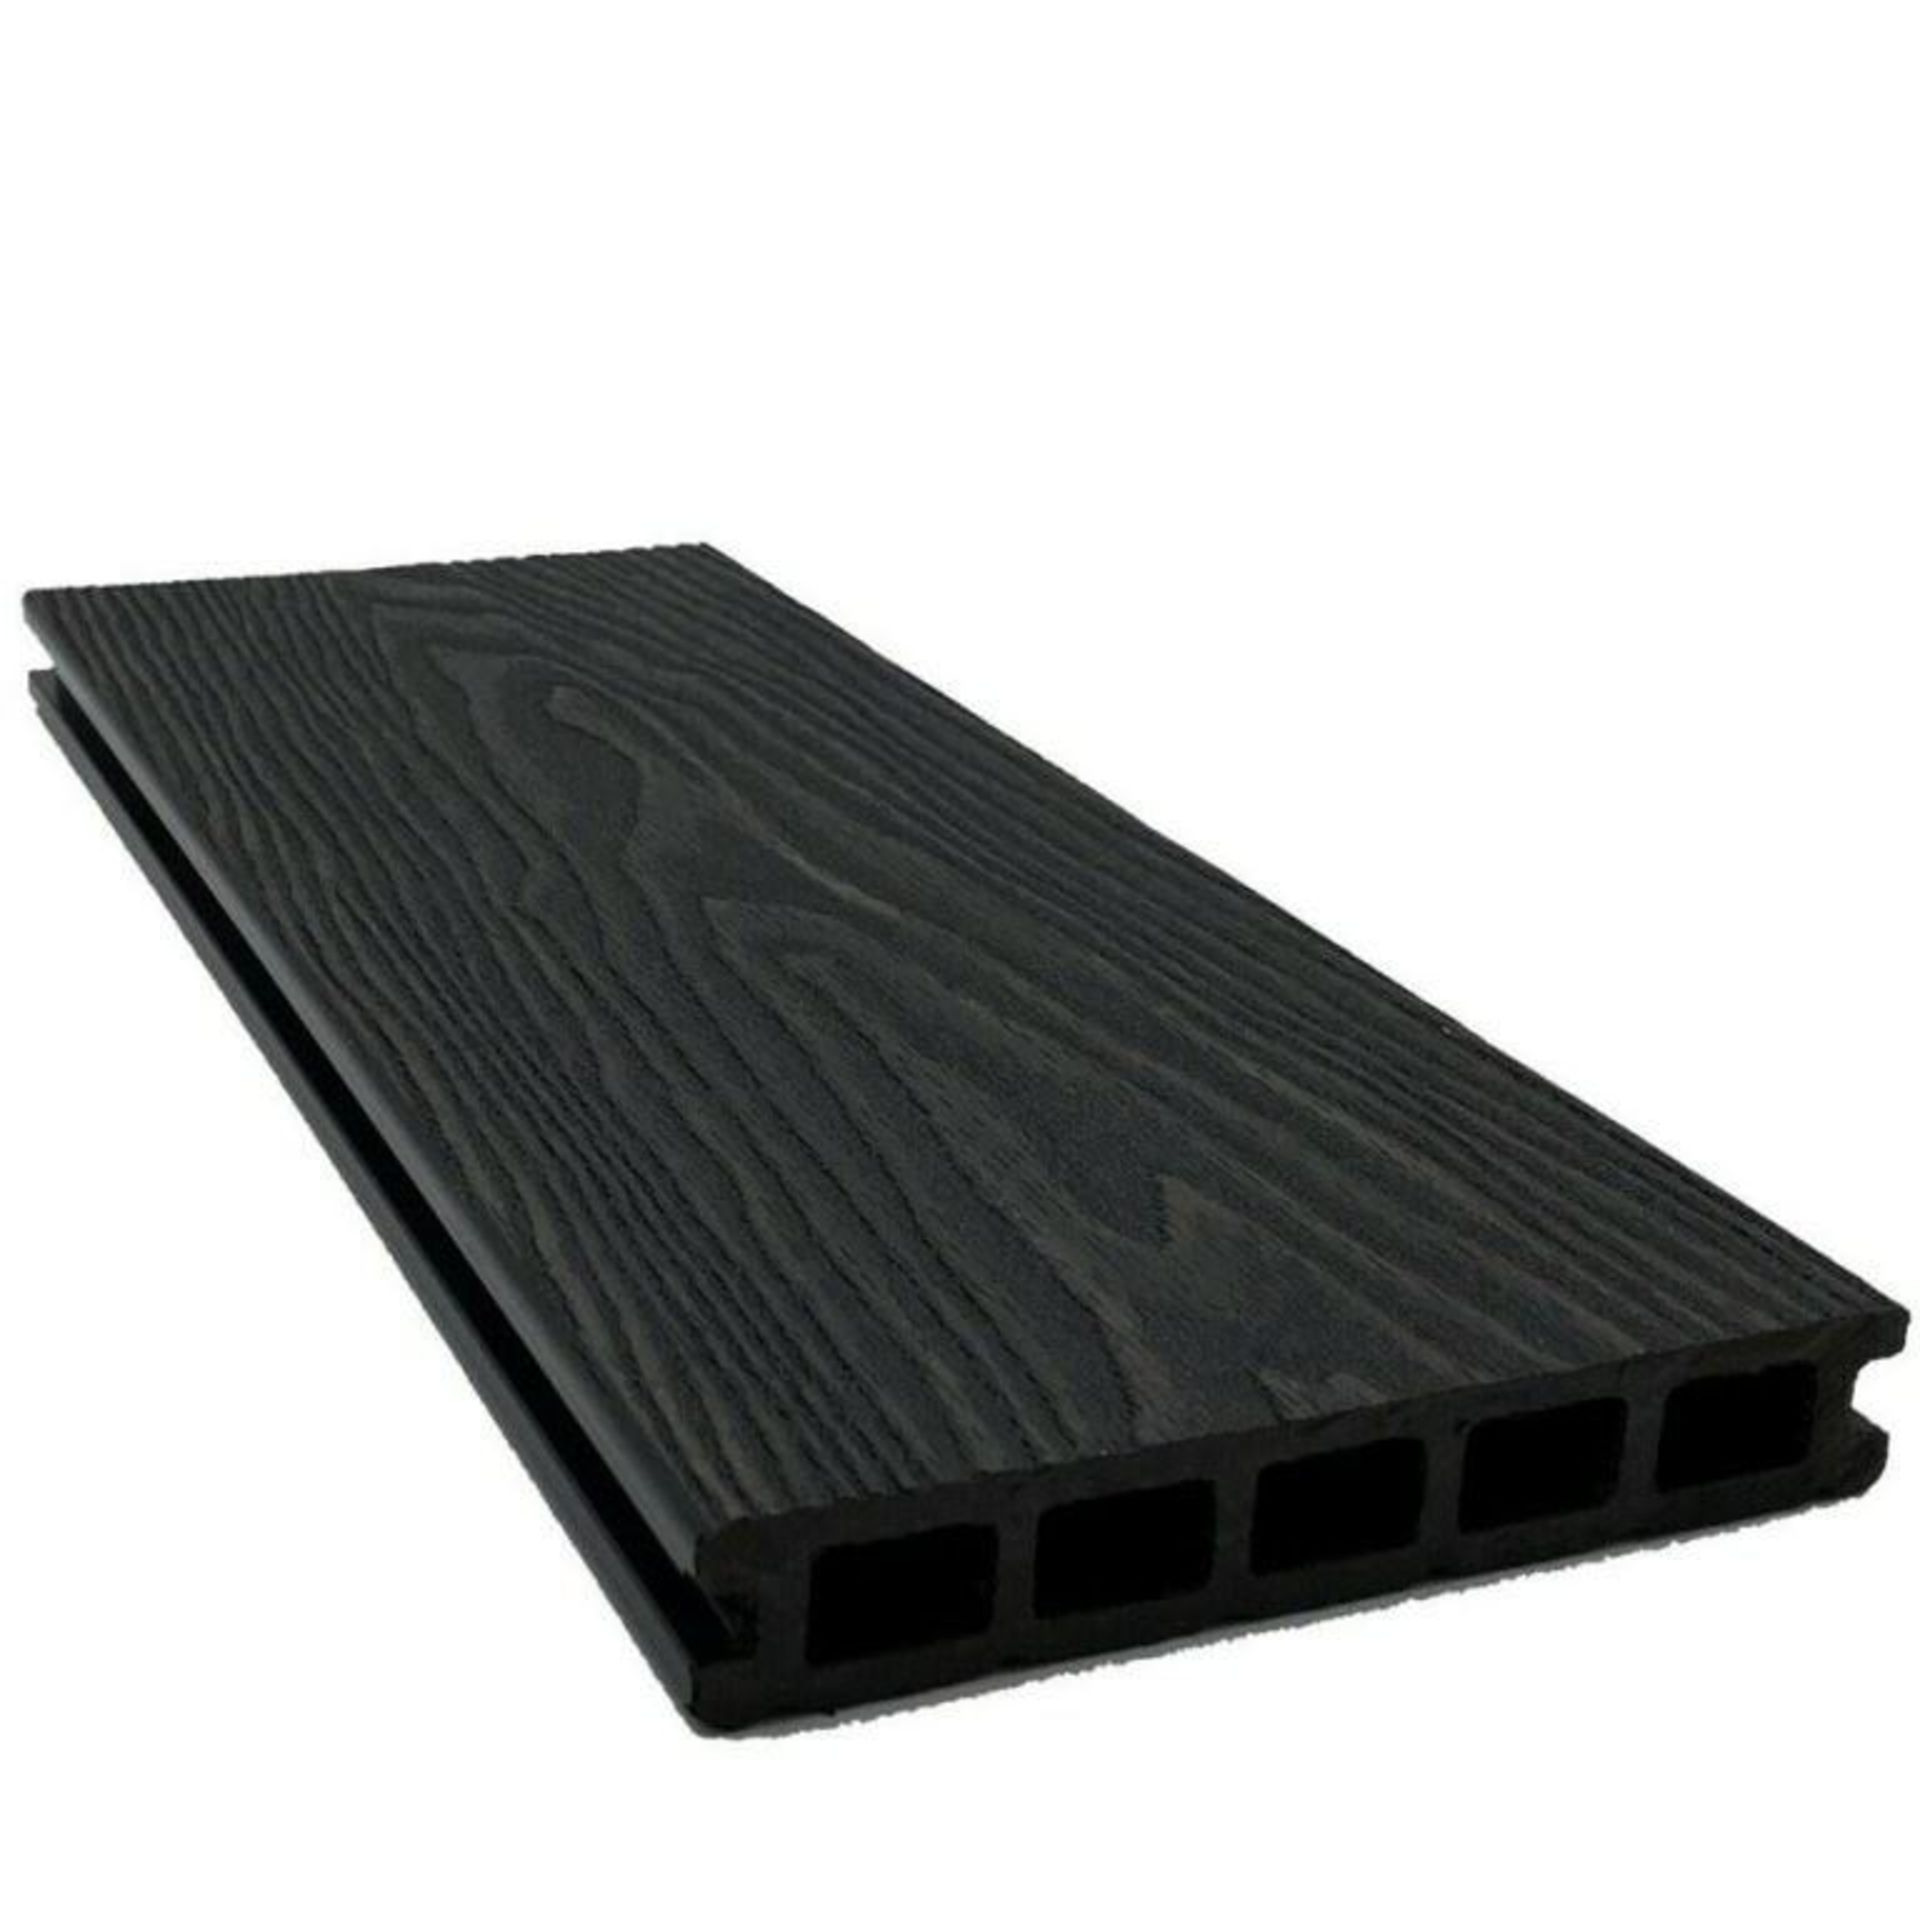 10x Composite Decking boards colour Cylon Ebony